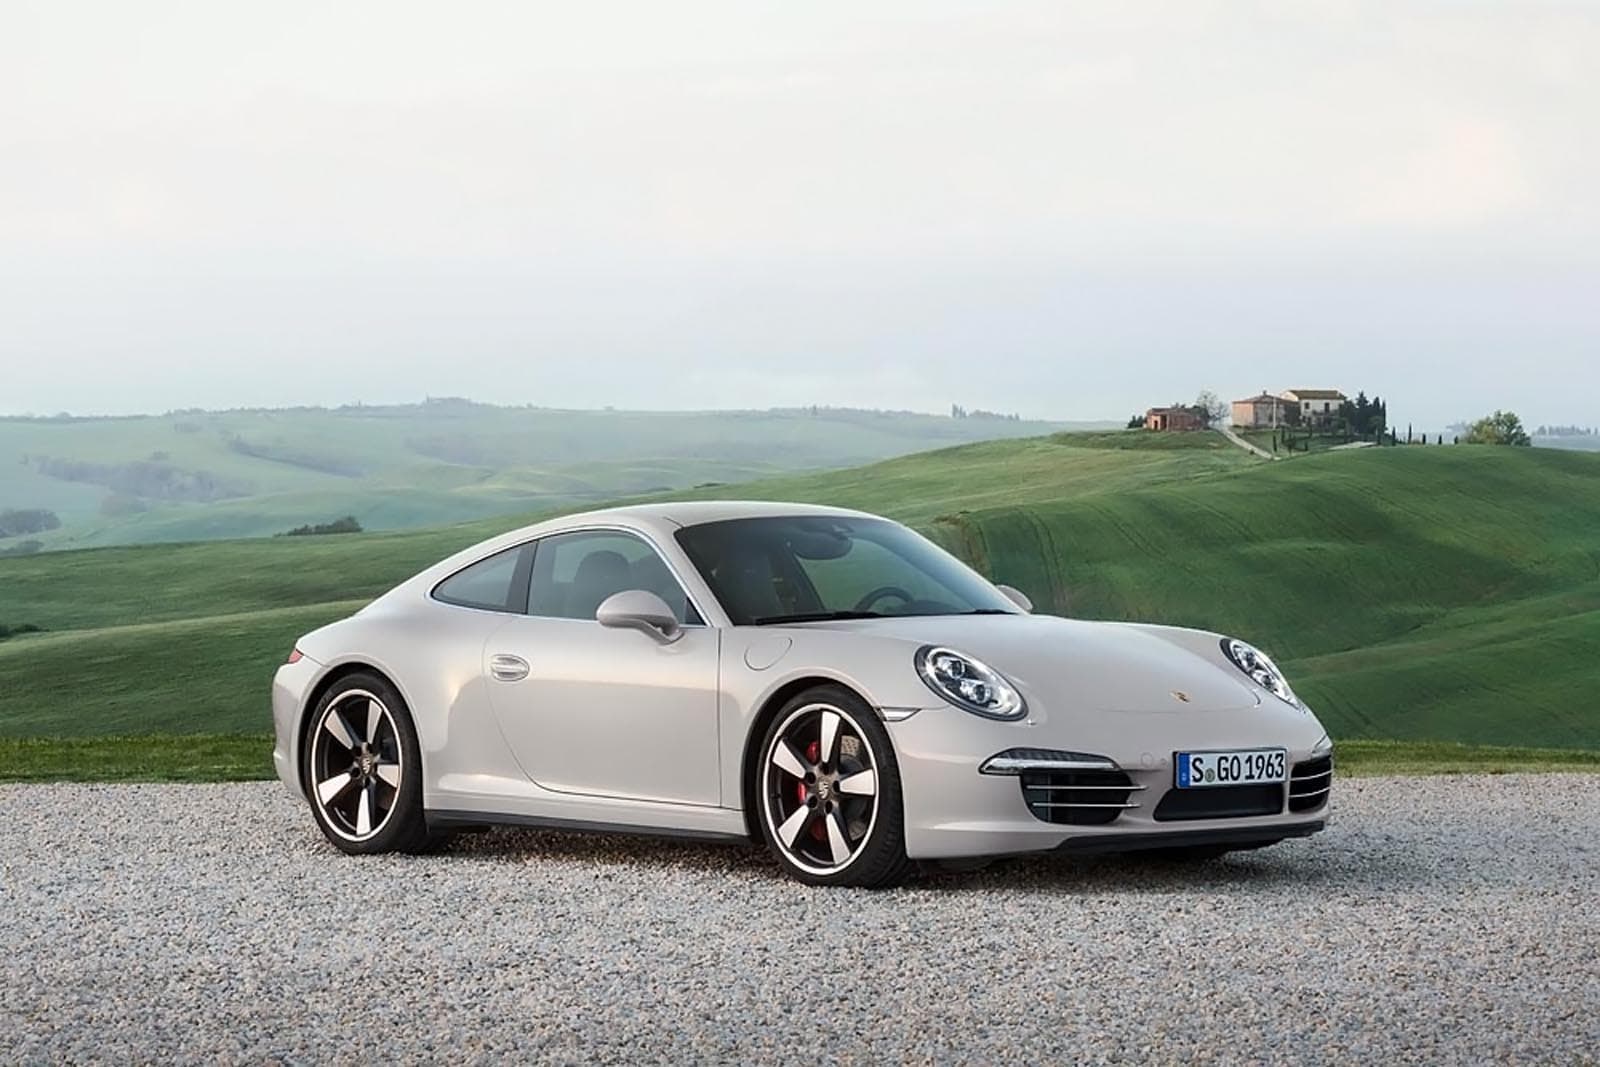 Used 2014 Porsche 911 Coupe Review | Edmunds